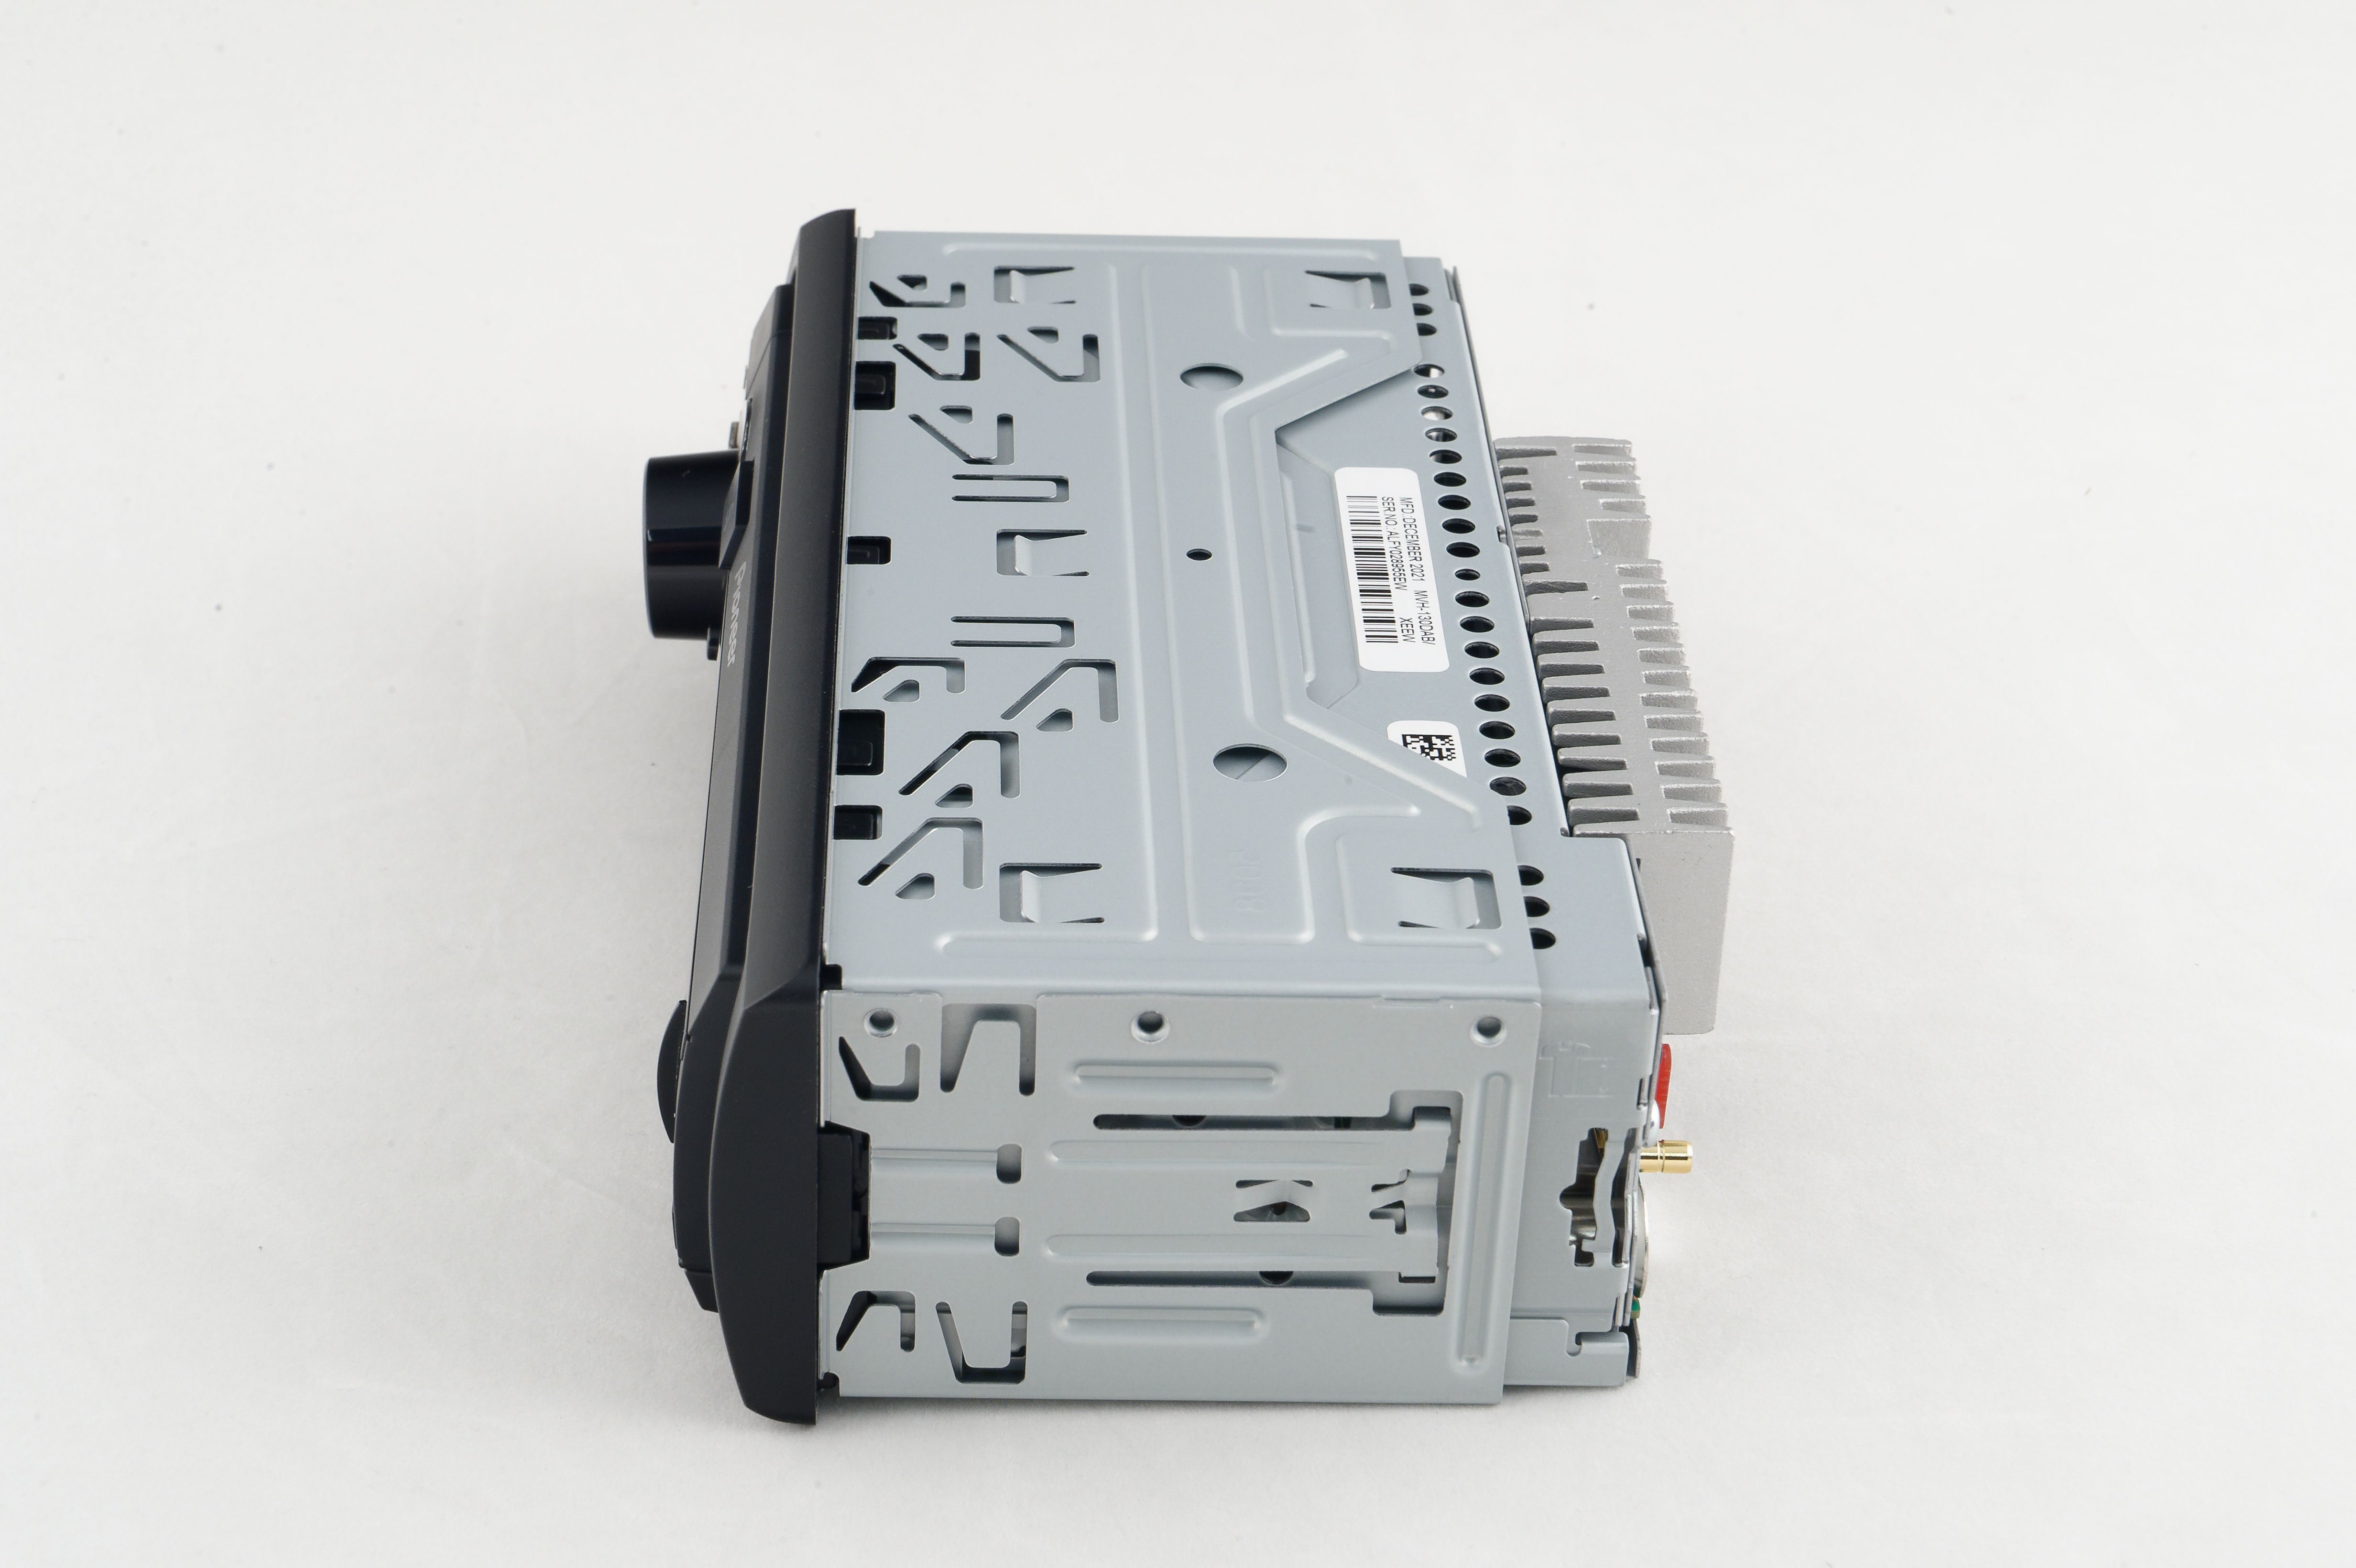 Autoradio - PIONEER - MVH-130DAB - USB - DAB+ - AUX - Cdiscount Auto